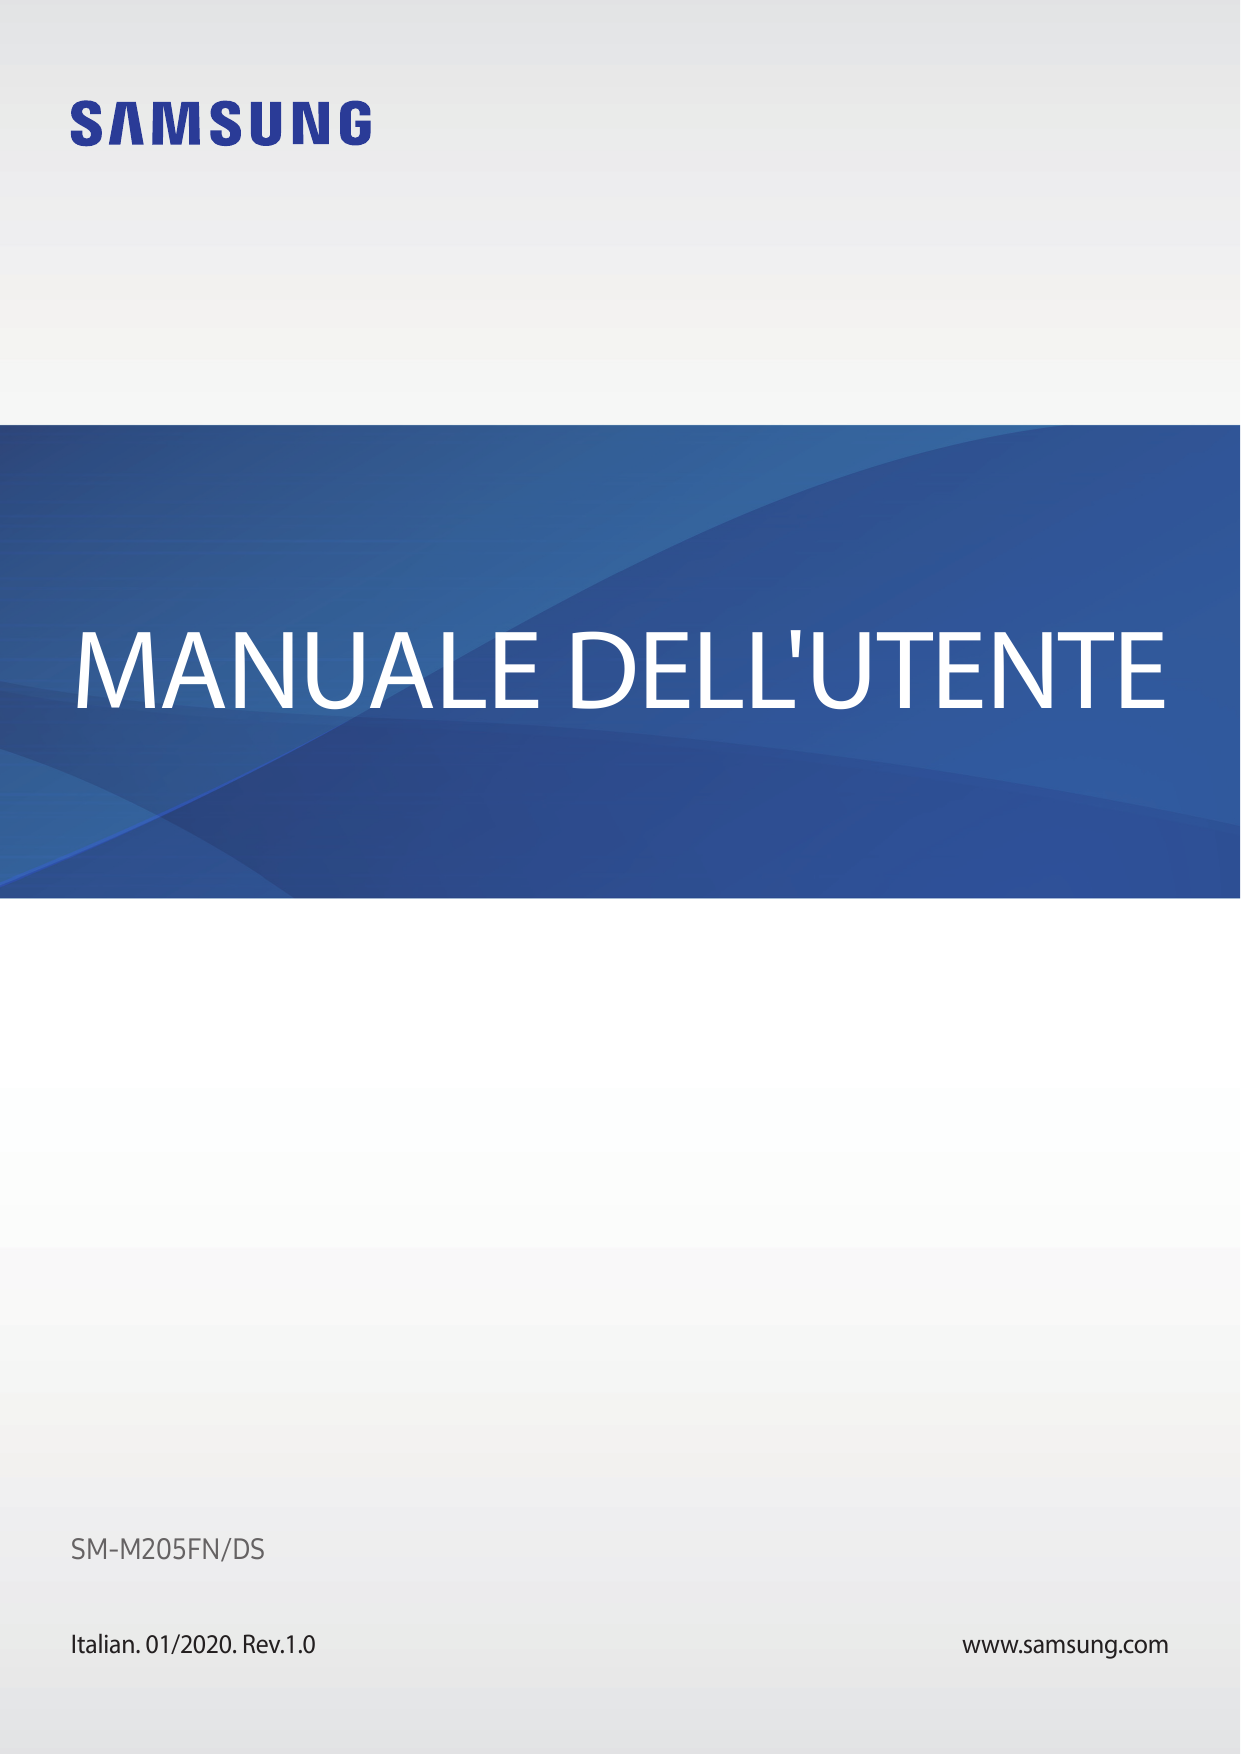 MANUALE DELL'UTENTESM-M205FN/DSItalian. 01/2020. Rev.1.0www.samsung.com